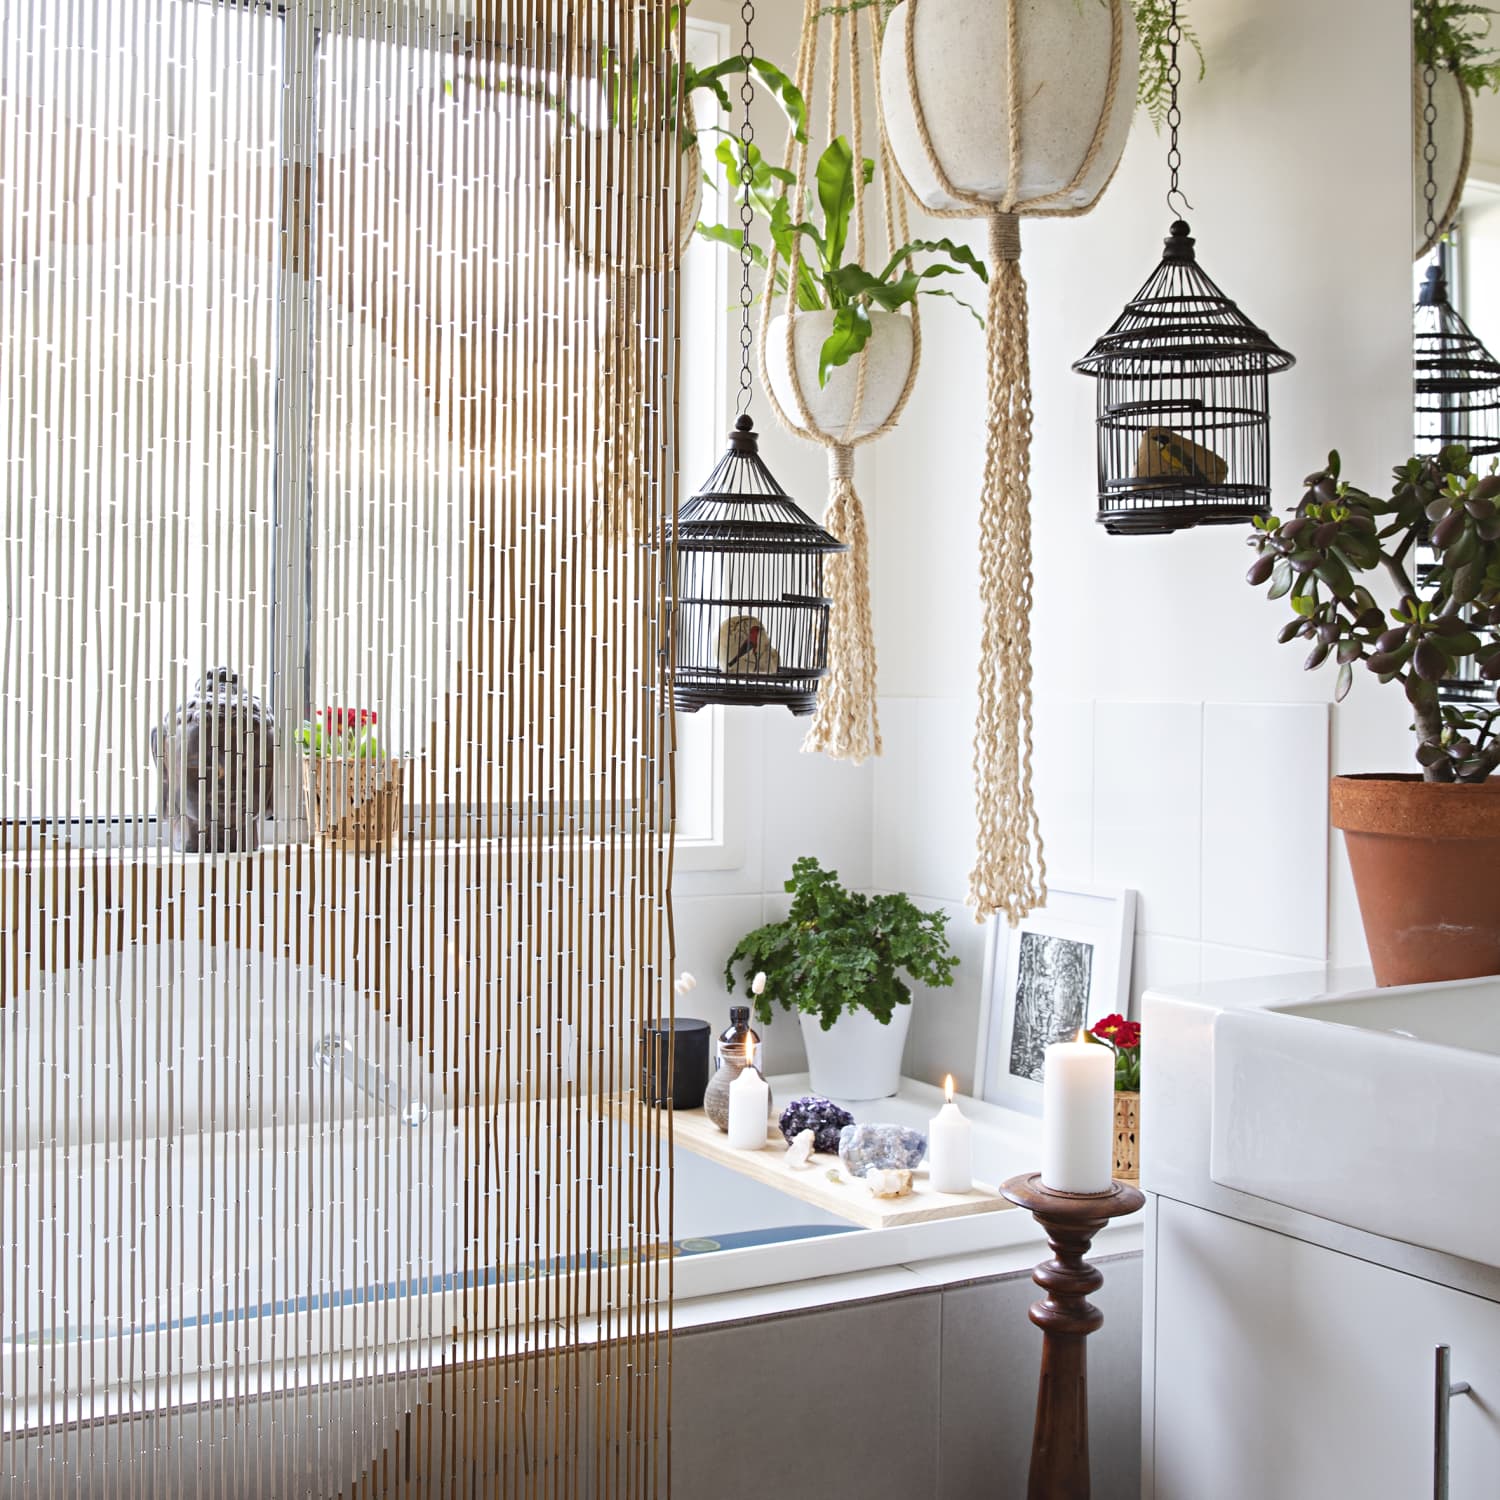 10 Boho Bathroom Ideas Photos of Cool Bohemian-Style Bathrooms | Apartment Therapy